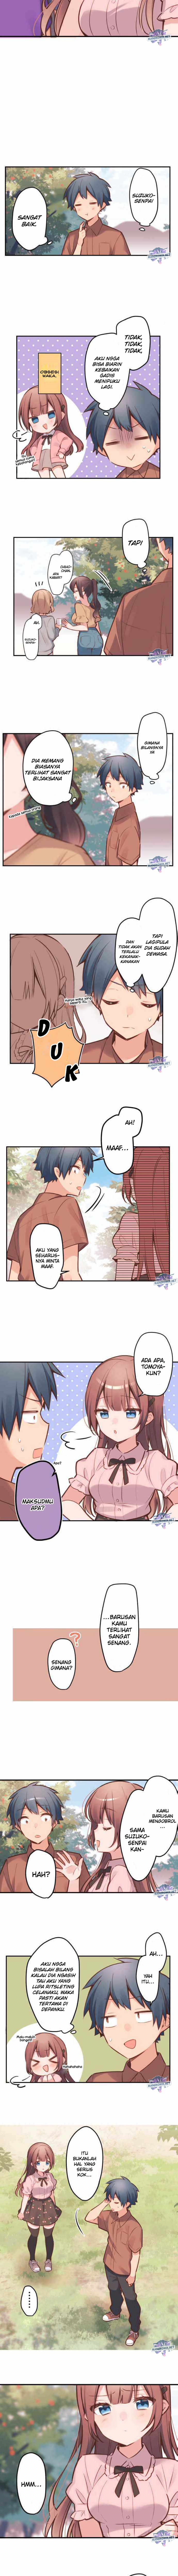 Waka-chan Is Flirty Again Chapter 07 4